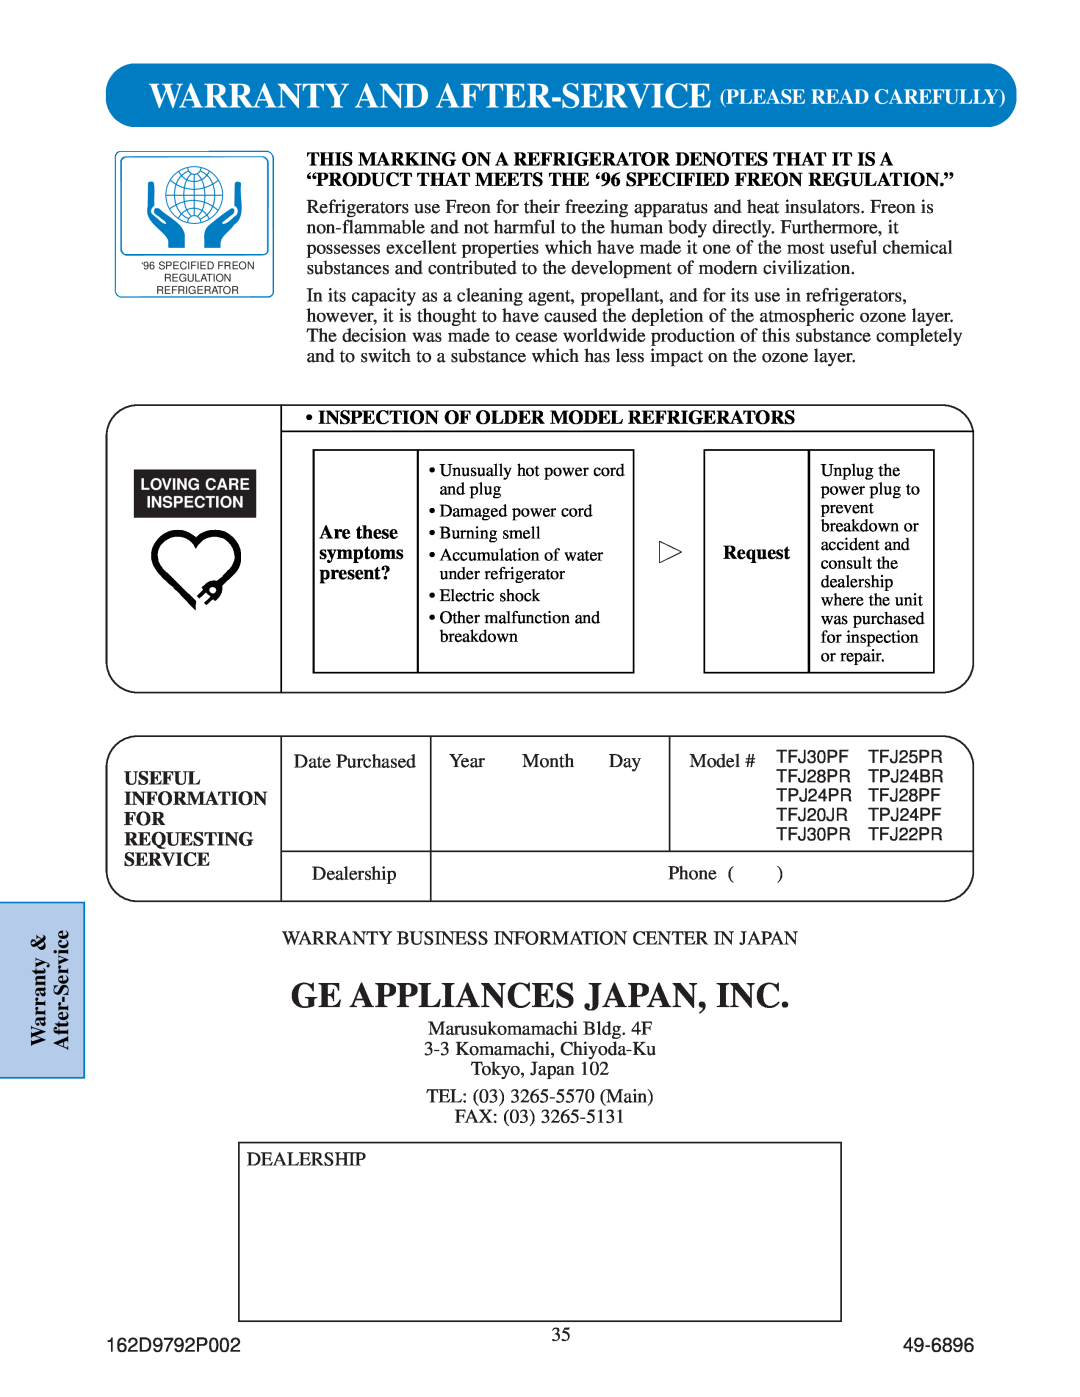 GE TFJ22PR, TPJ24PR Ge Appliances Japan, Inc, Warranty And After-Service Please Read Carefully, Warranty & After-Service 